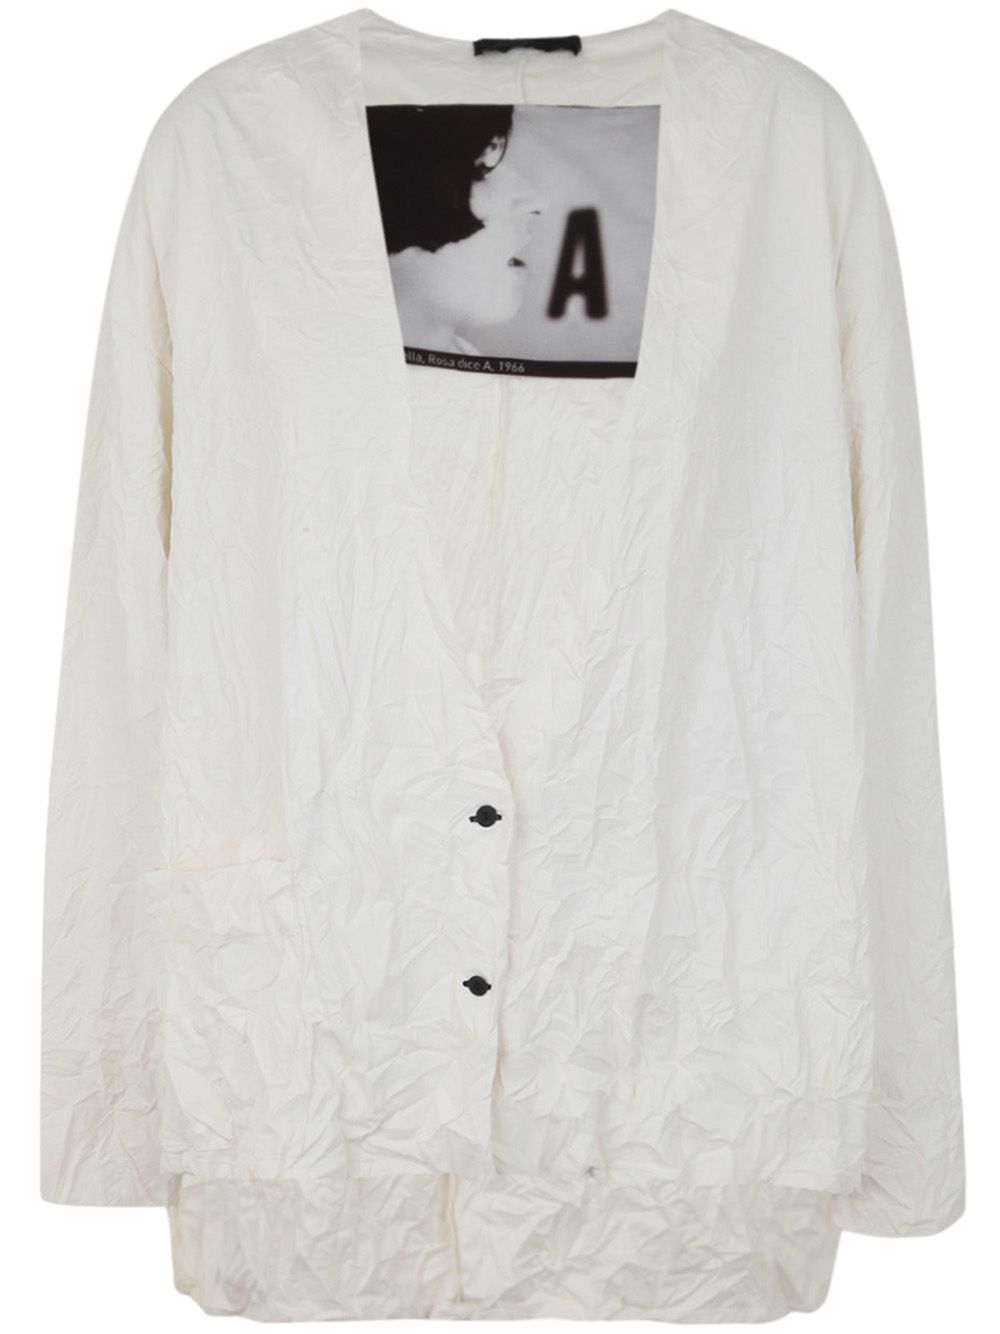 Maria Calderara Crinkled Faux Leather Sweater In White